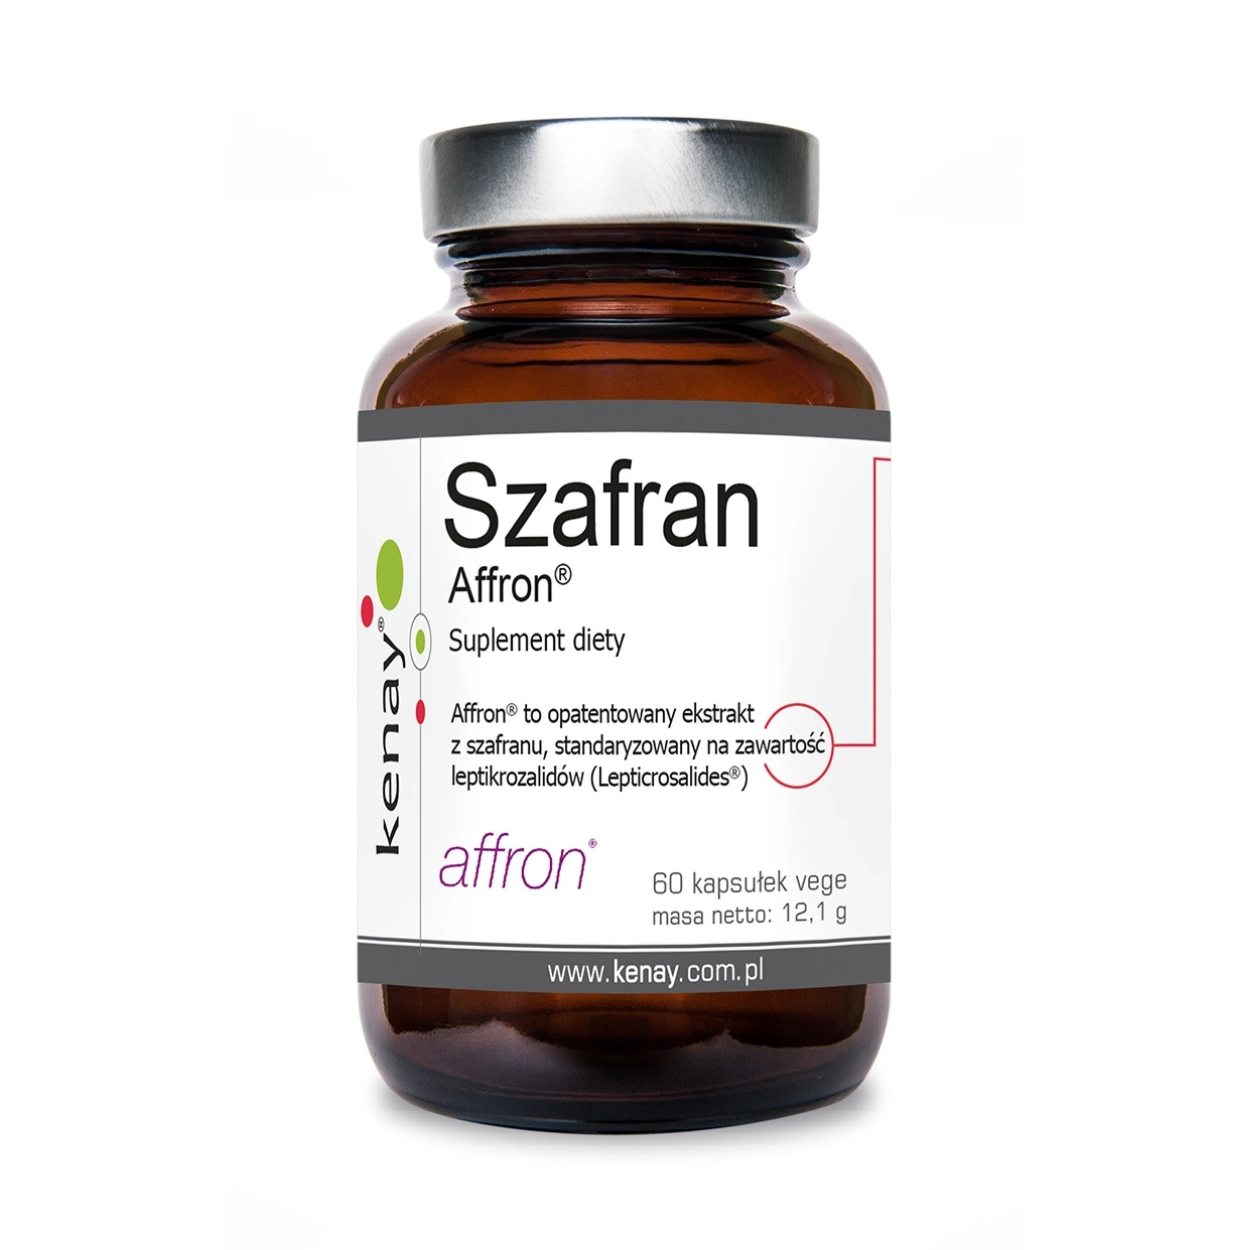 SZAFRAN Affron® (60 kapsułek vege) – suplement diety